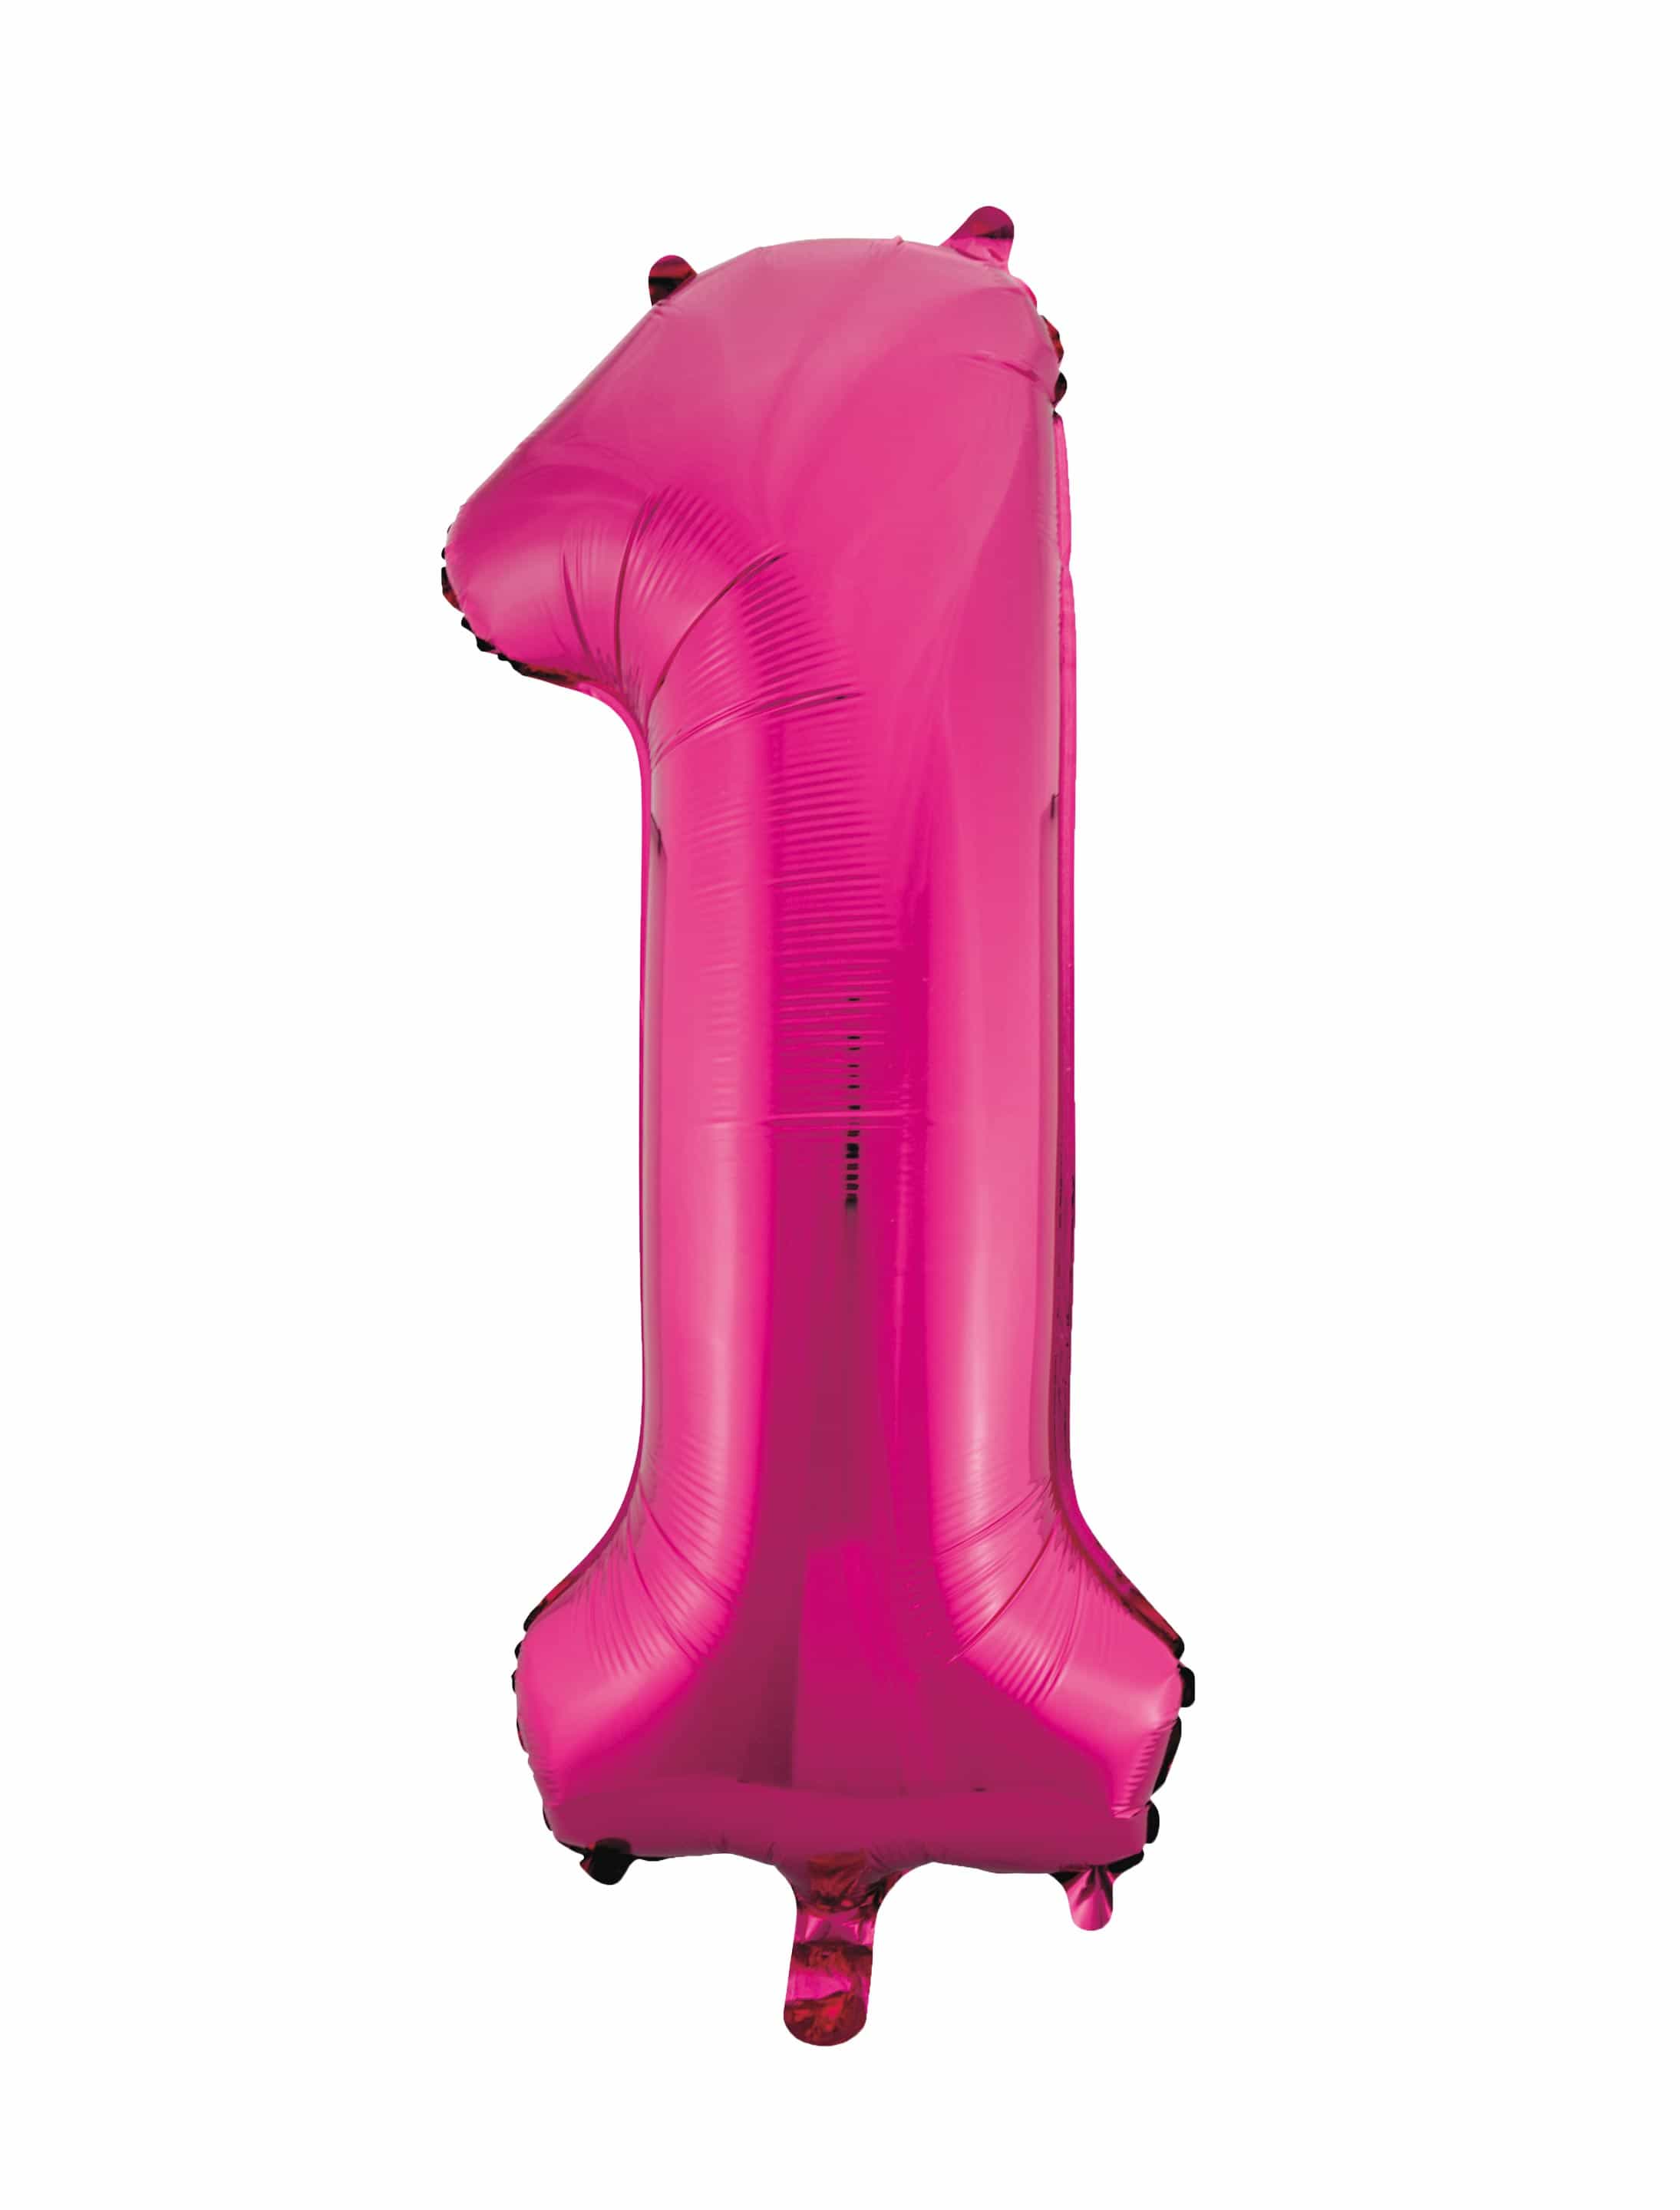 Folienballon Zahl 1 L pink